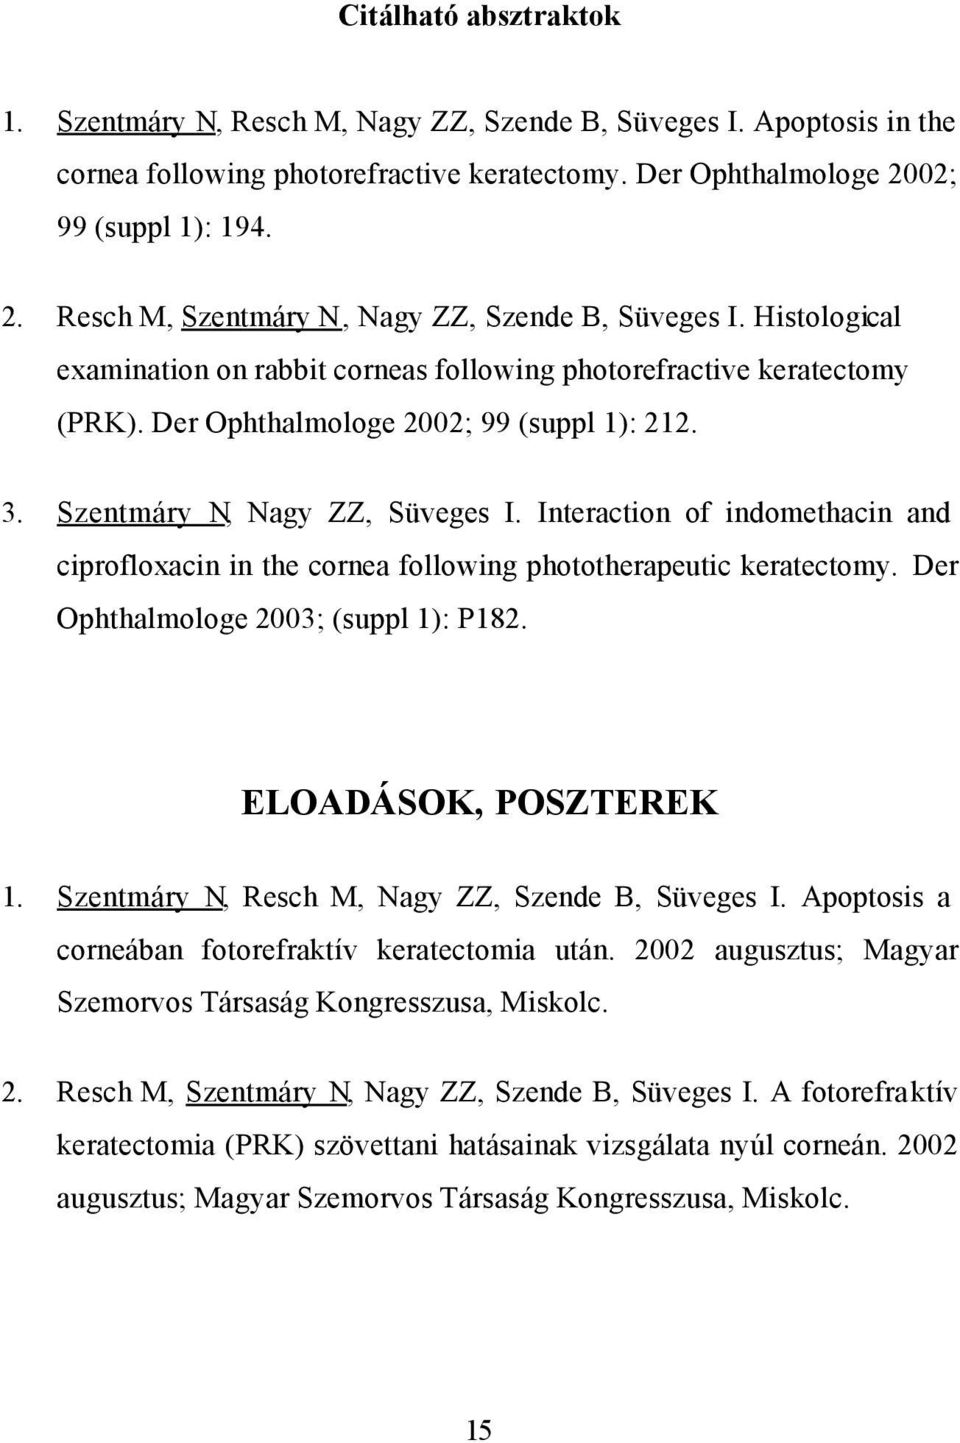 Der Ophthalmologe 2002; 99 (suppl 1): 212. 3. Szentmáry N, Nagy ZZ, Süveges I. Interaction of indomethacin and ciprofloxacin in the cornea following phototherapeutic keratectomy.